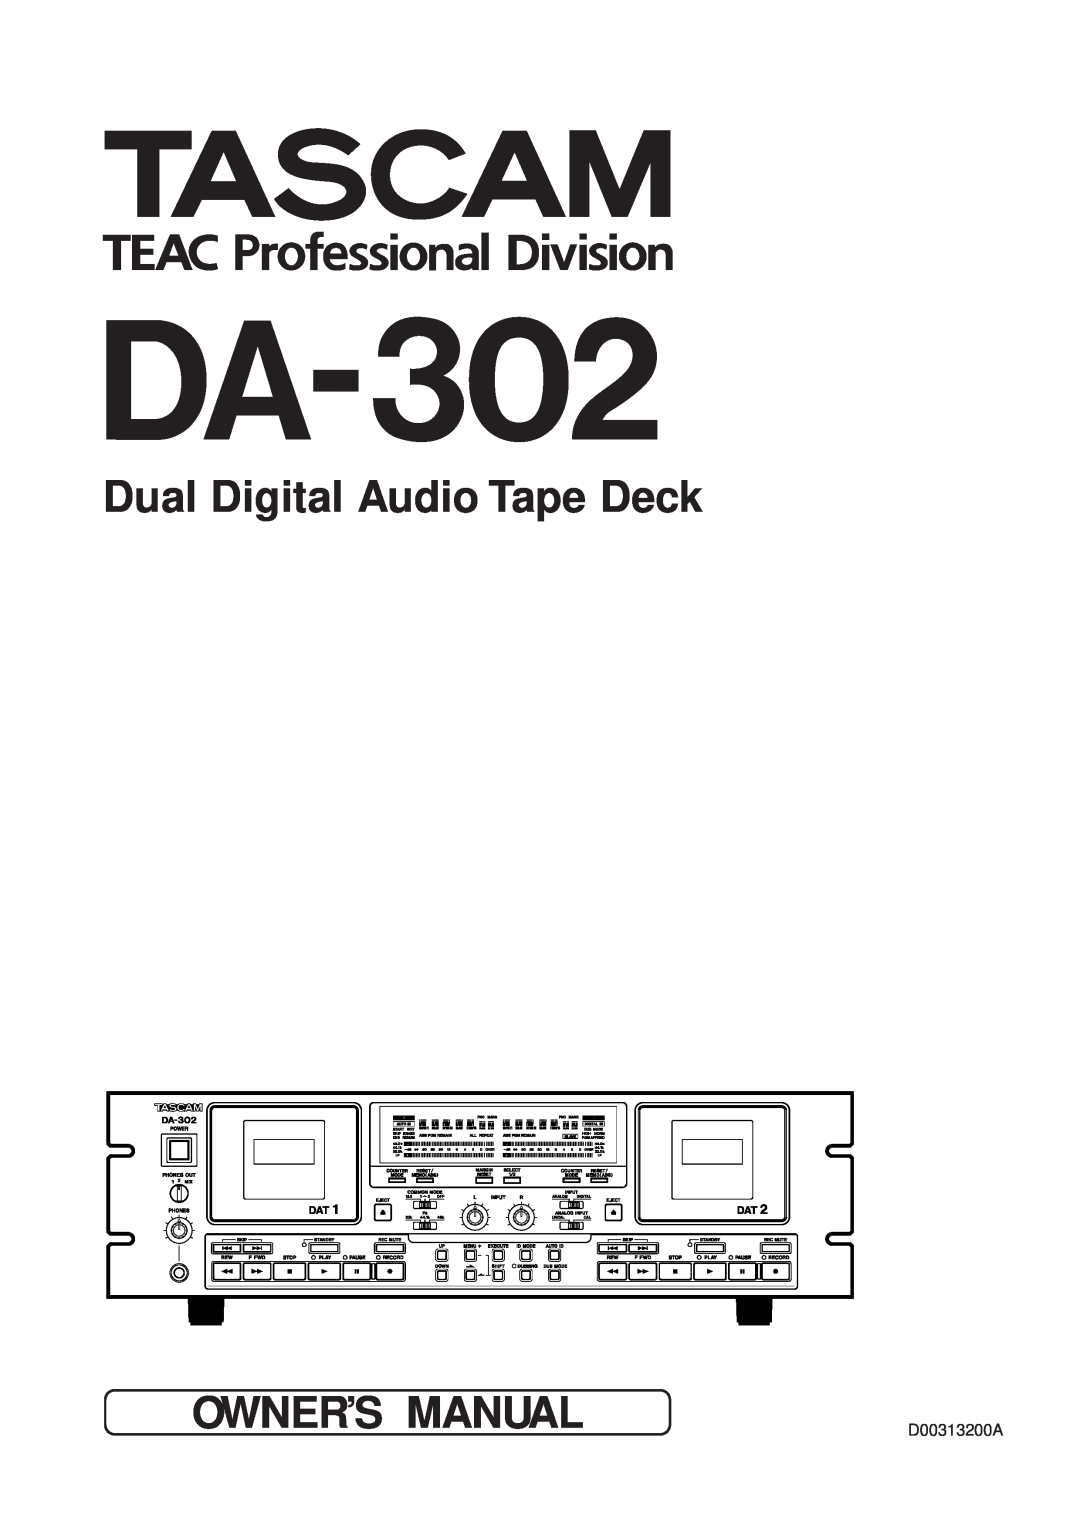 Tascam DA-302 owner manual Dual Digital Audio Tape Deck 